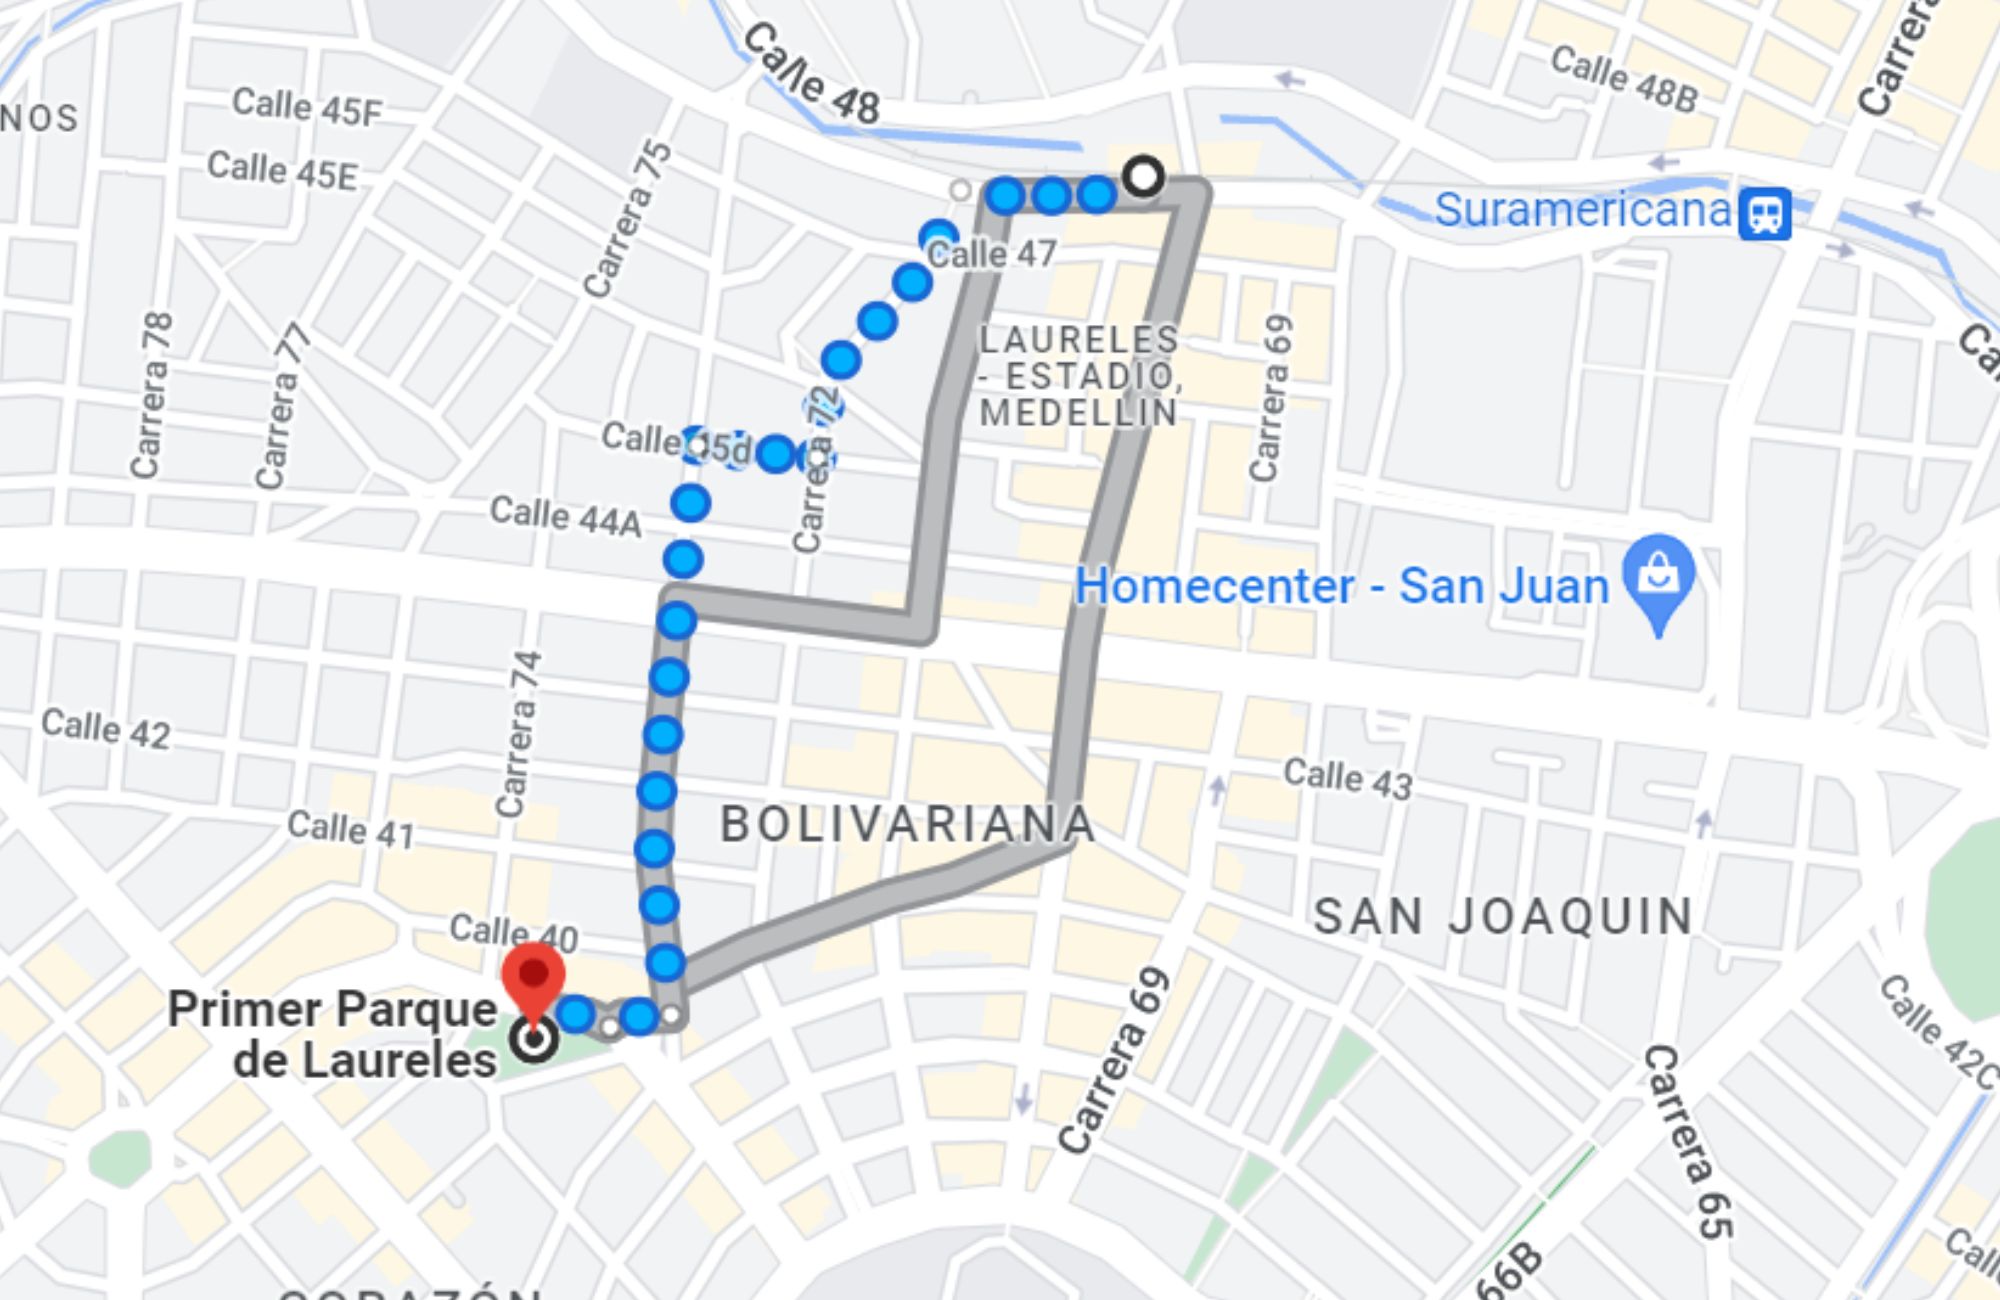 How to get to Primer Parque de Laureles - 1.3km/17 minute walk from Estadio station